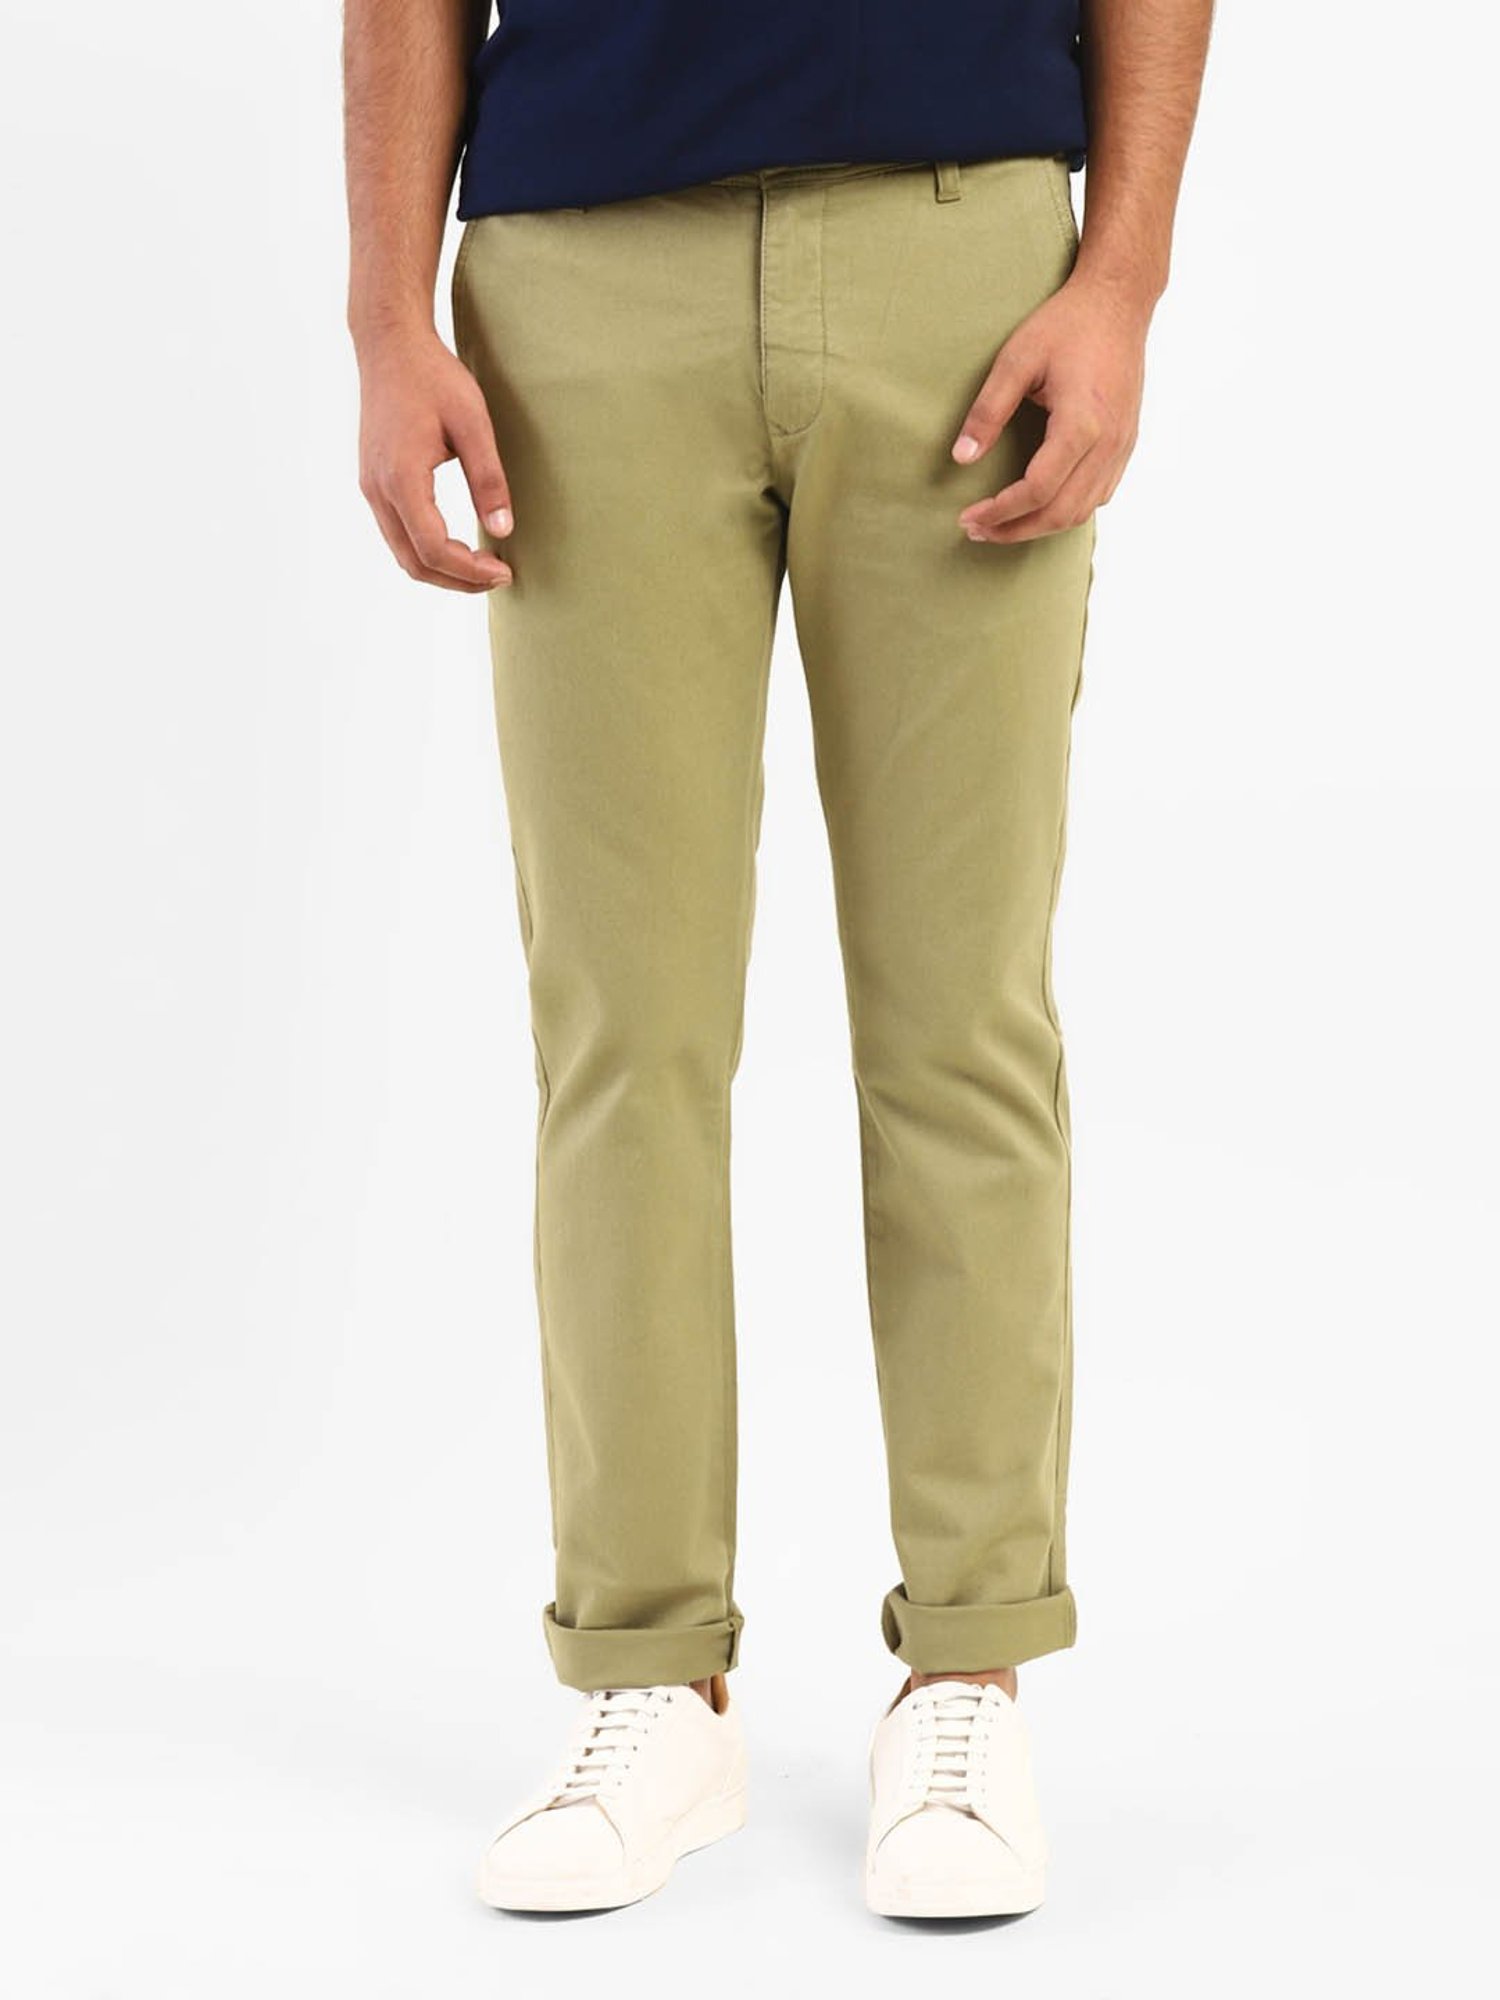 Levis 511 Fern Olive Cotton Slim Fit Trousers